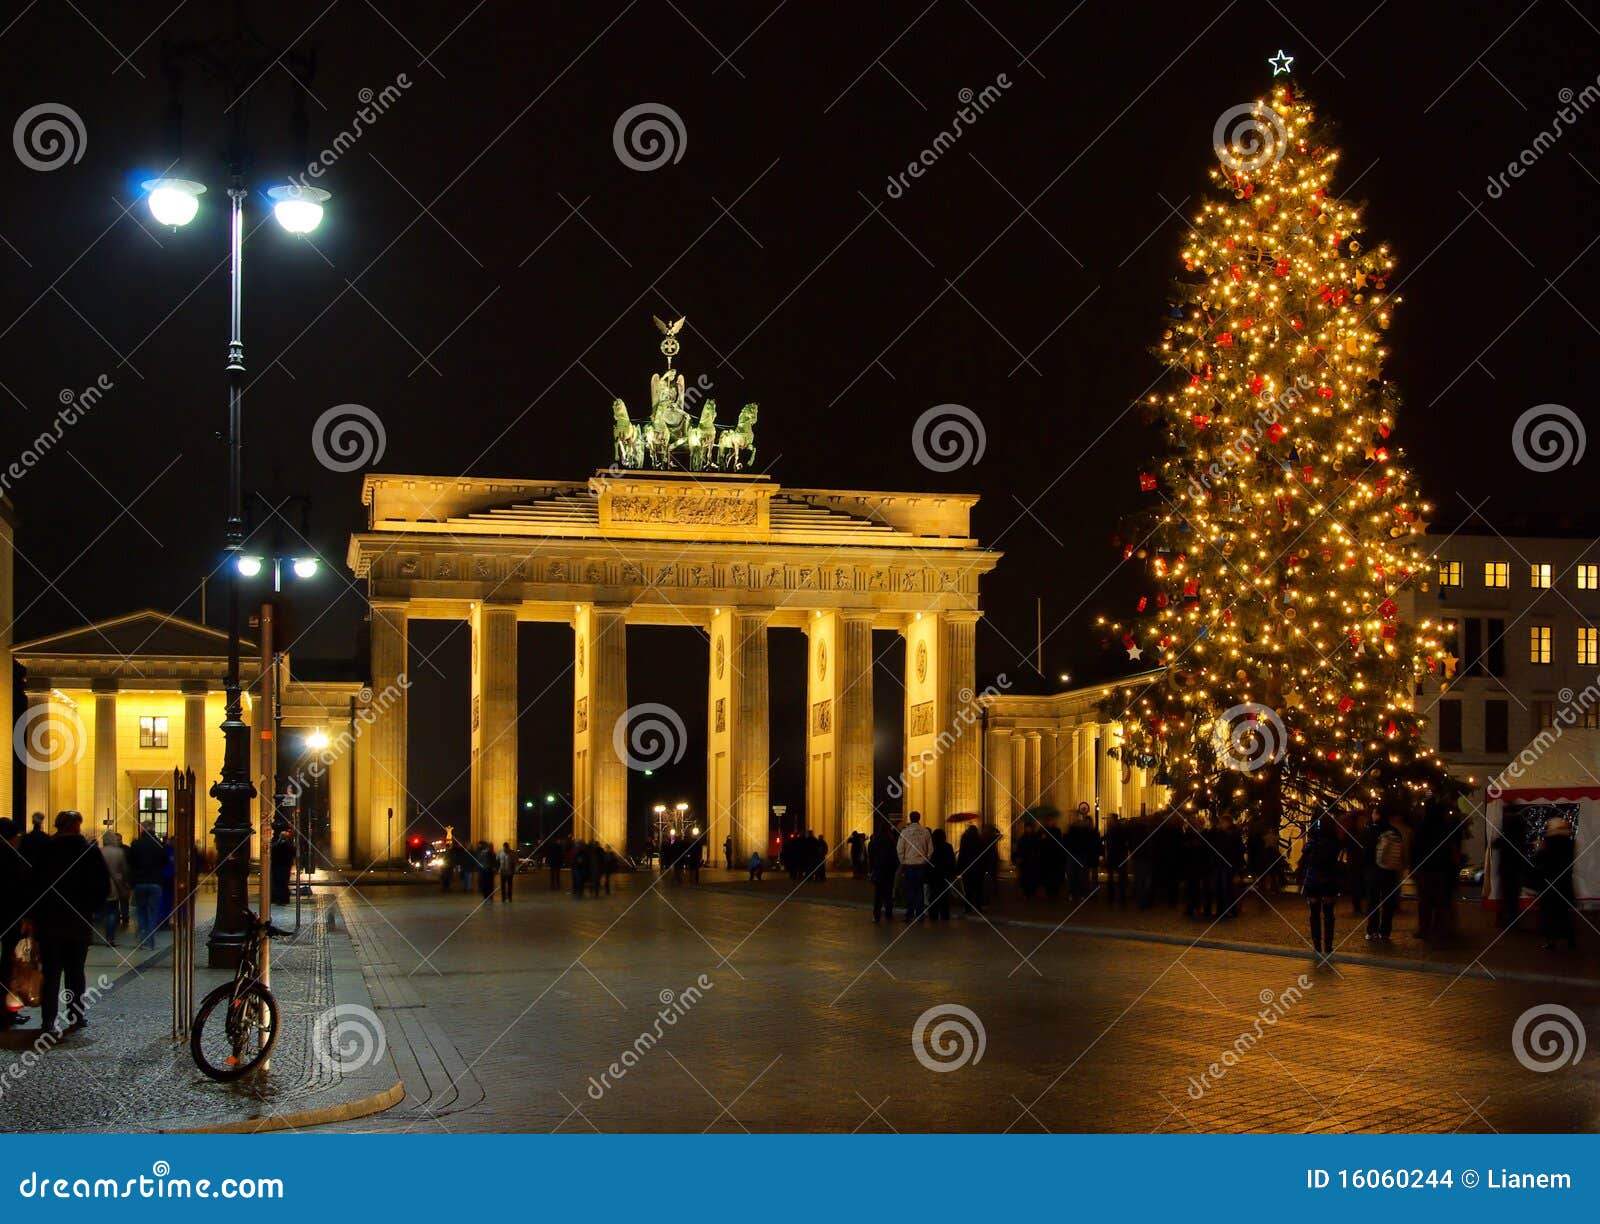 berlin brandenburg gate christmas